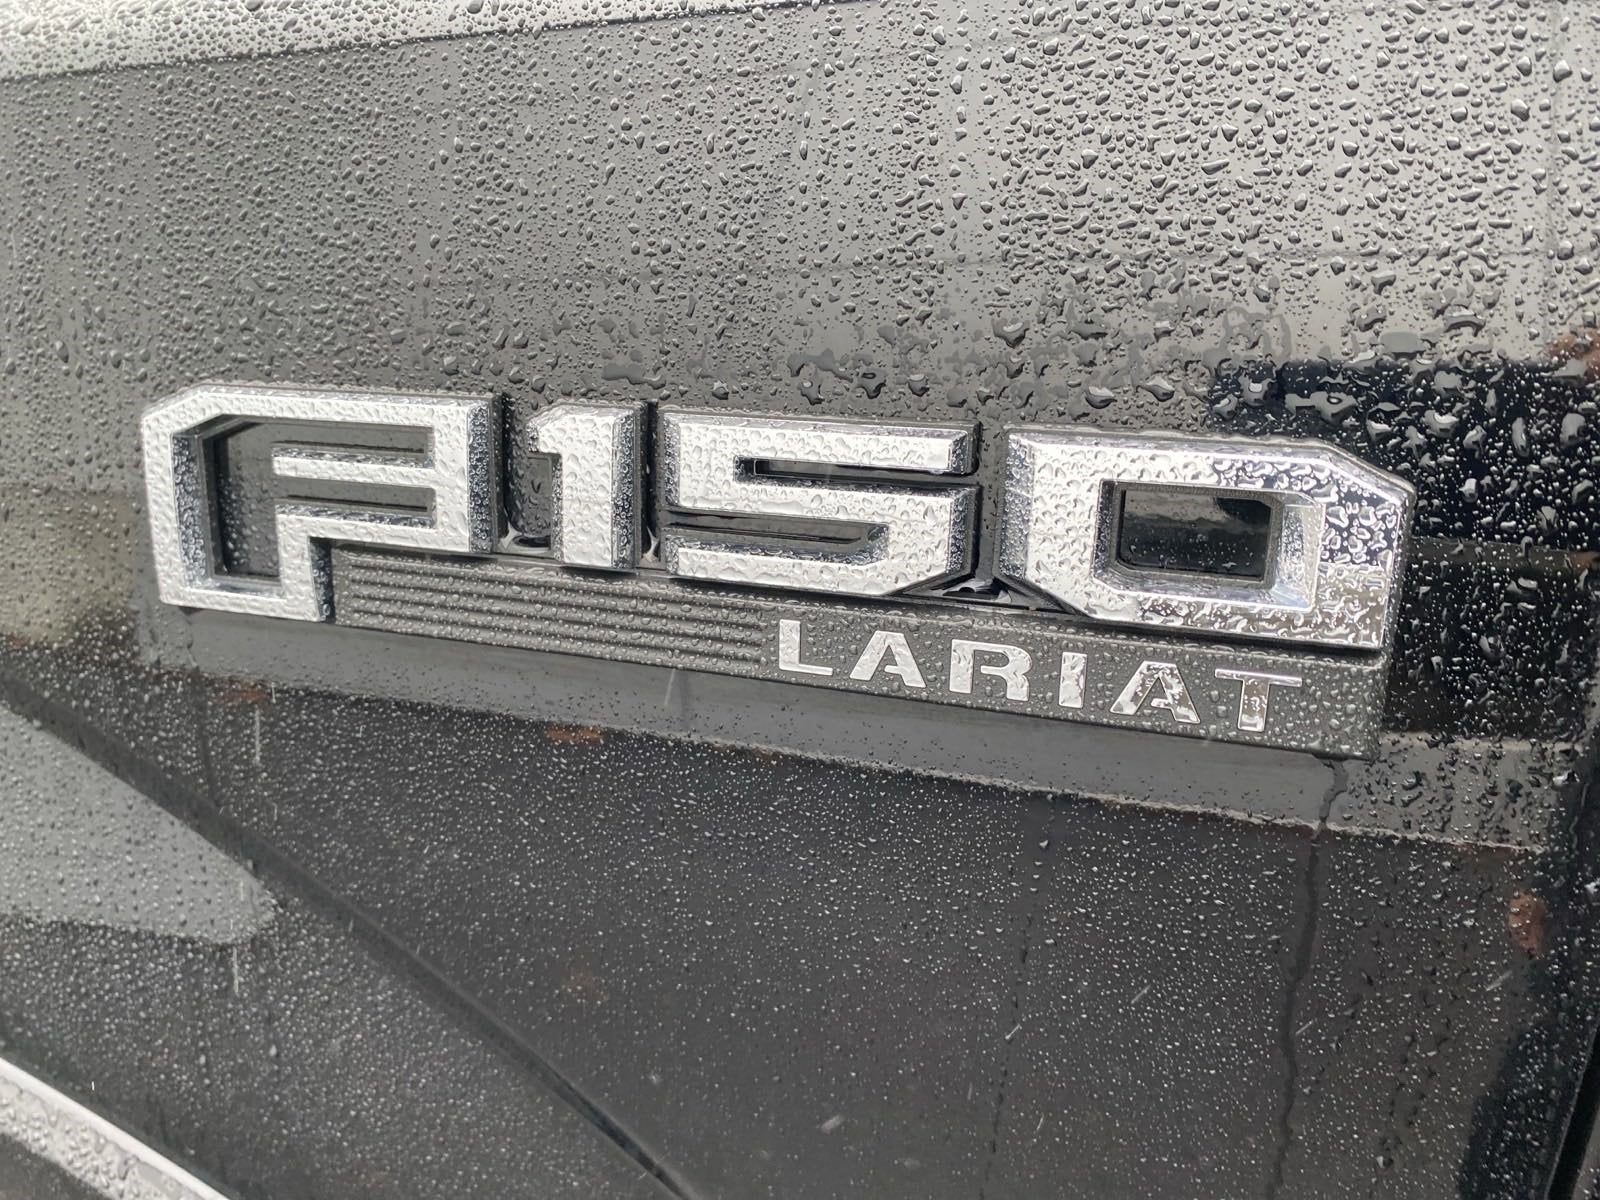 2018 Ford F-150 LARIAT